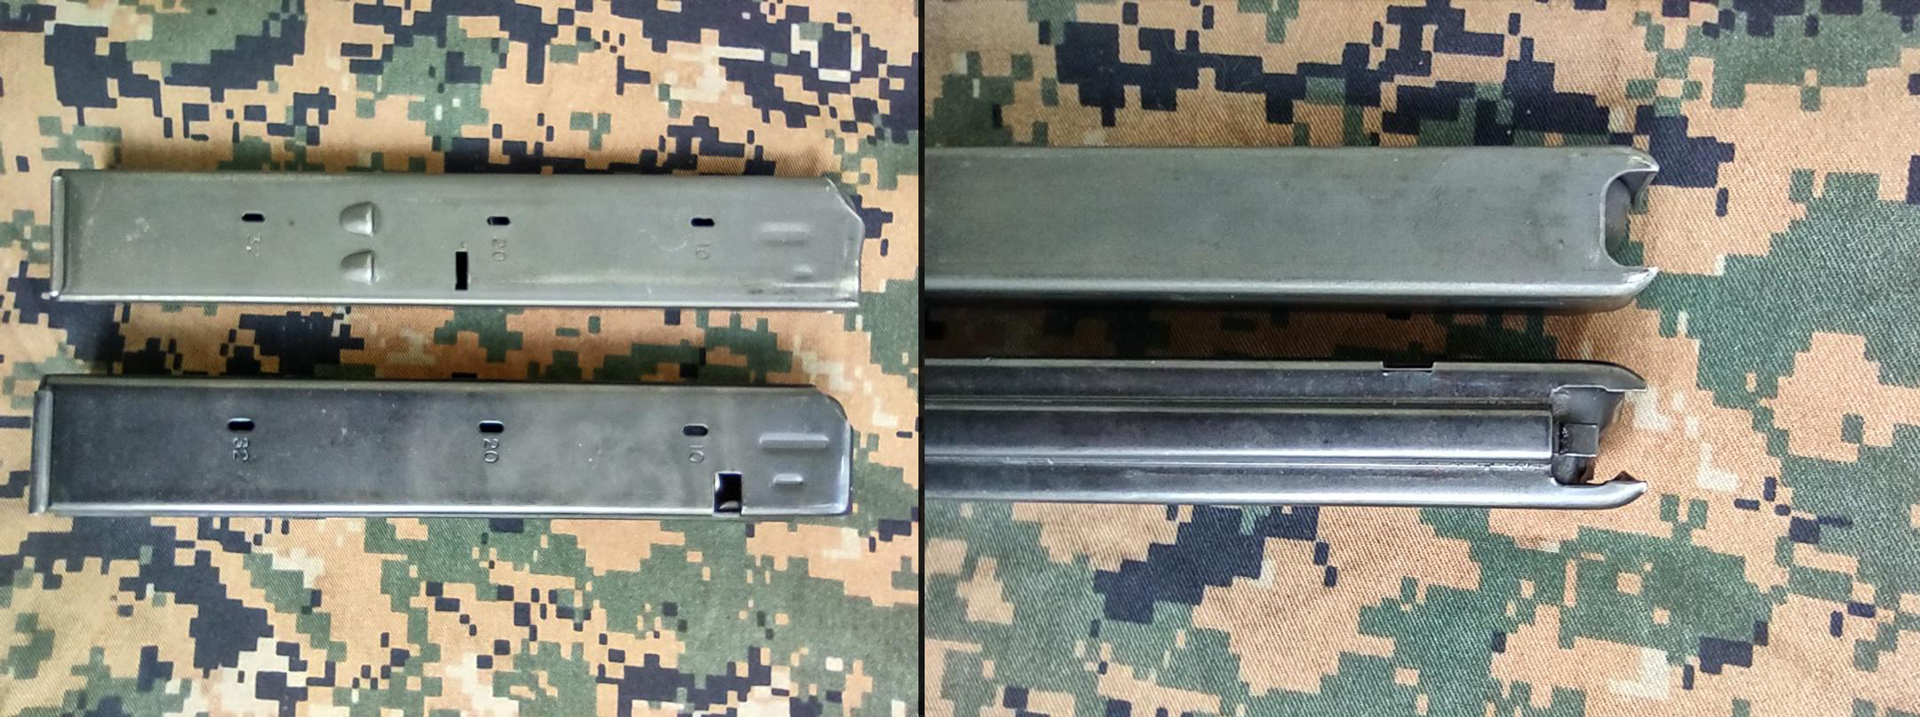 Two images side by side colt magazine ammunition mag smg uzi on camouflage background